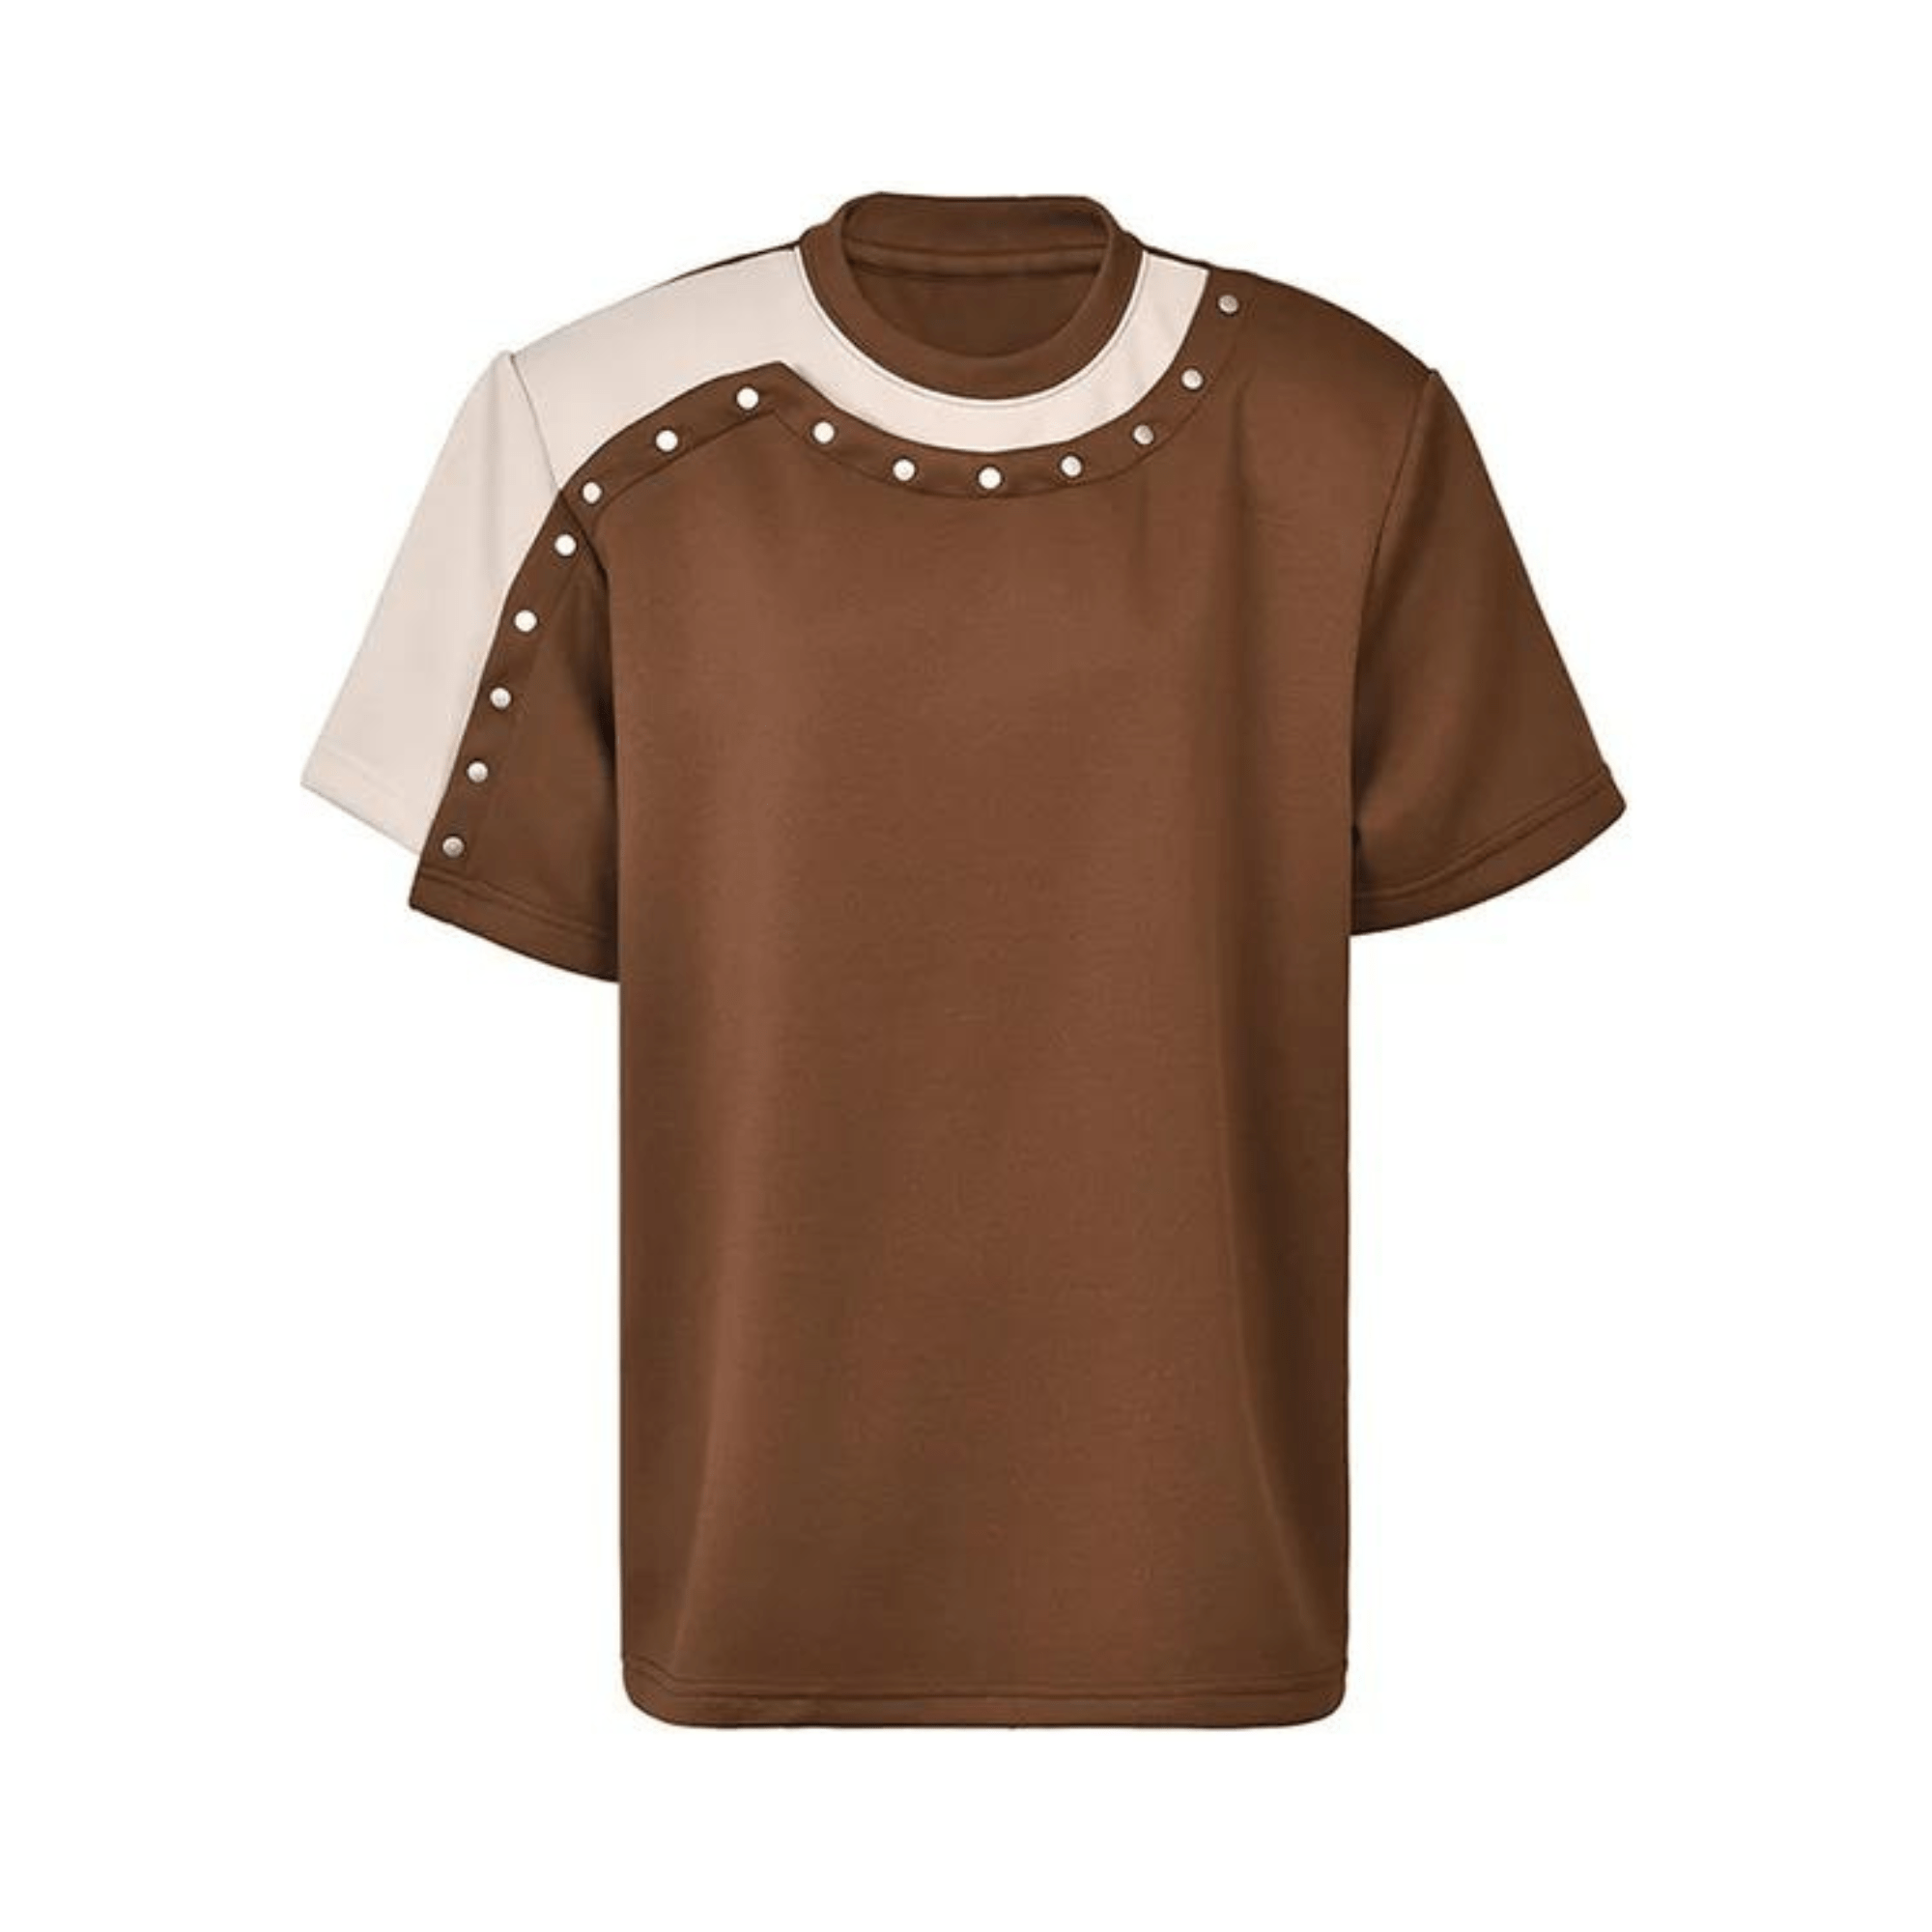 Two-Tone Overlap Studs T-Shirt - Kelly Obi New York